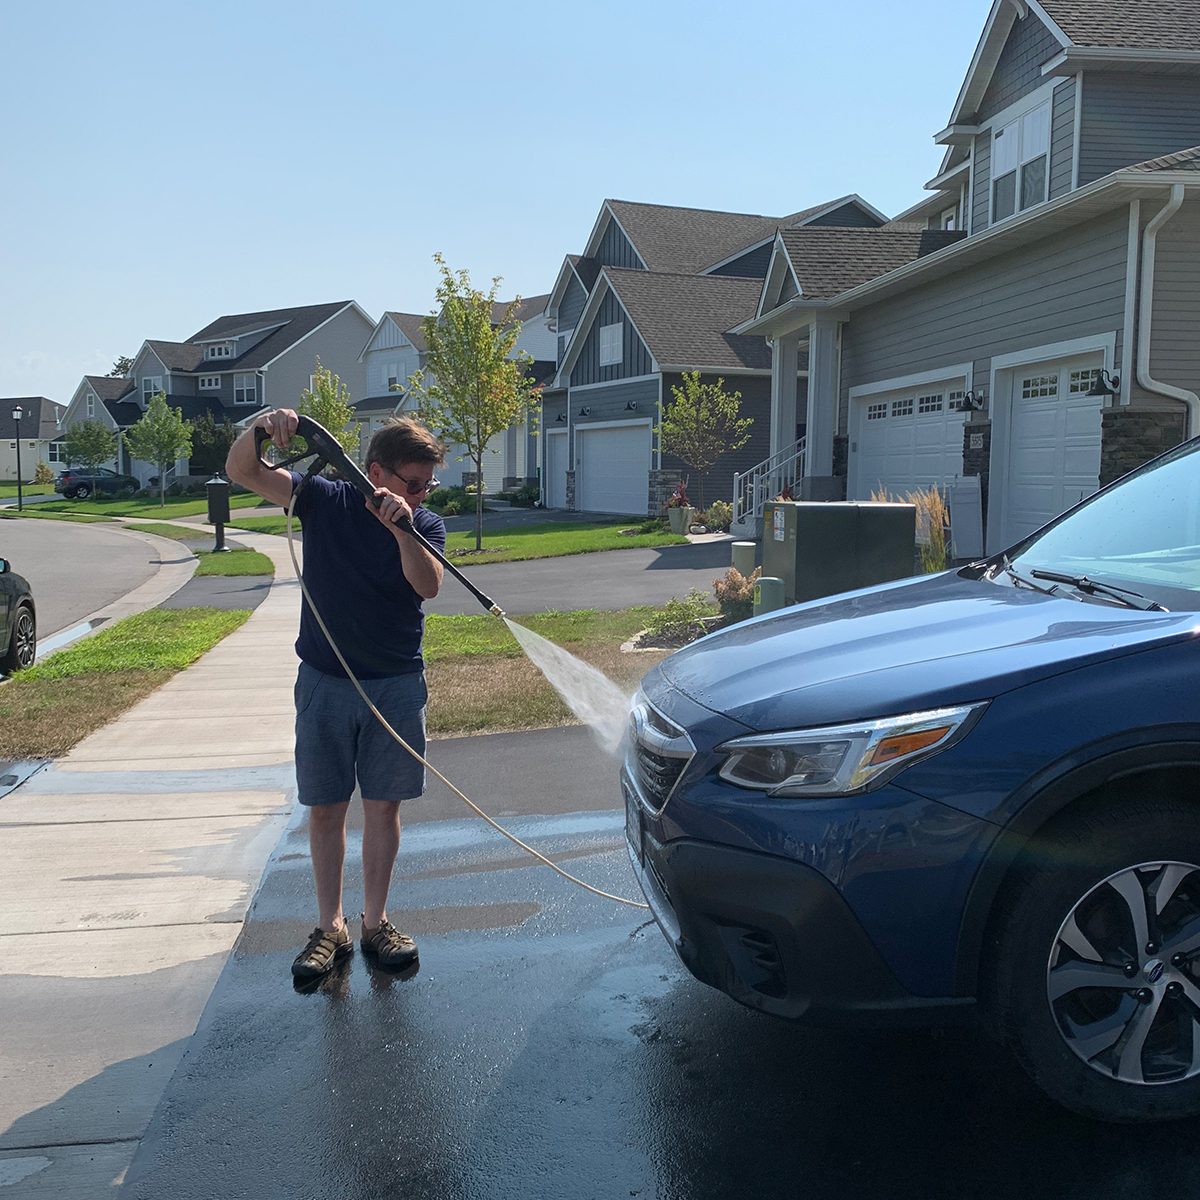 man pressure washing his car in driveway